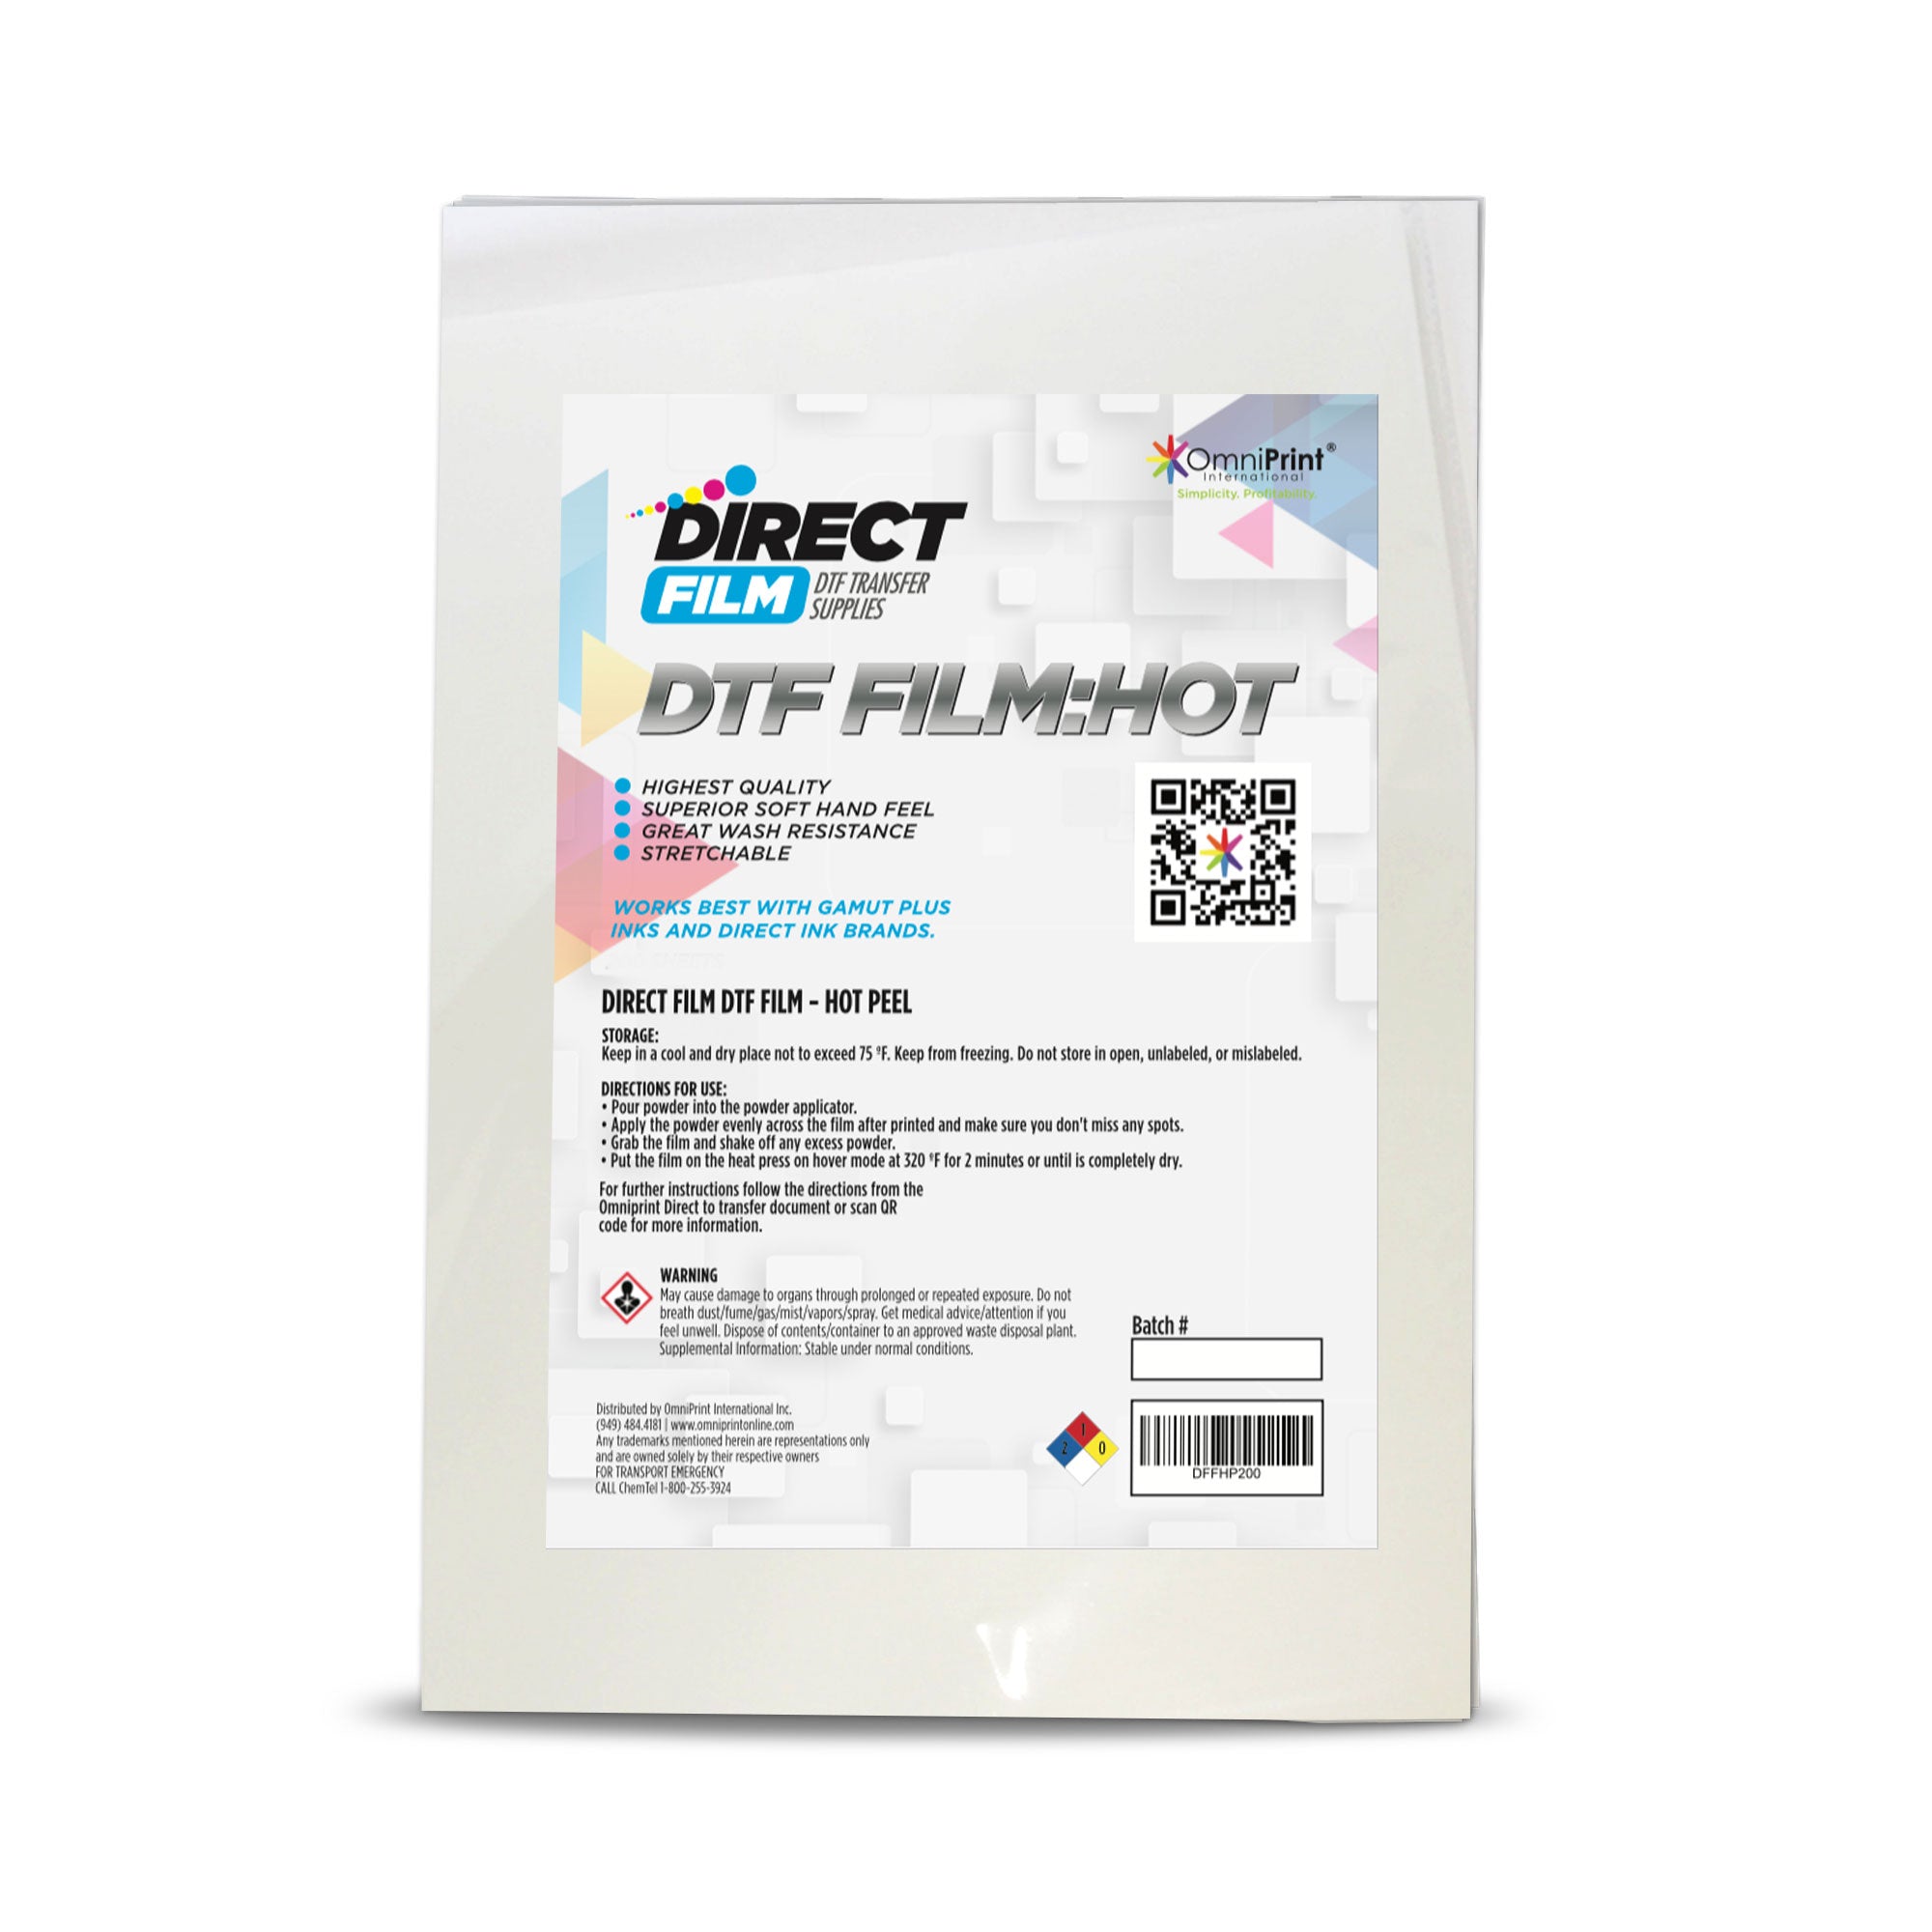 Direct-to-Film (DTF) printing business starter kit